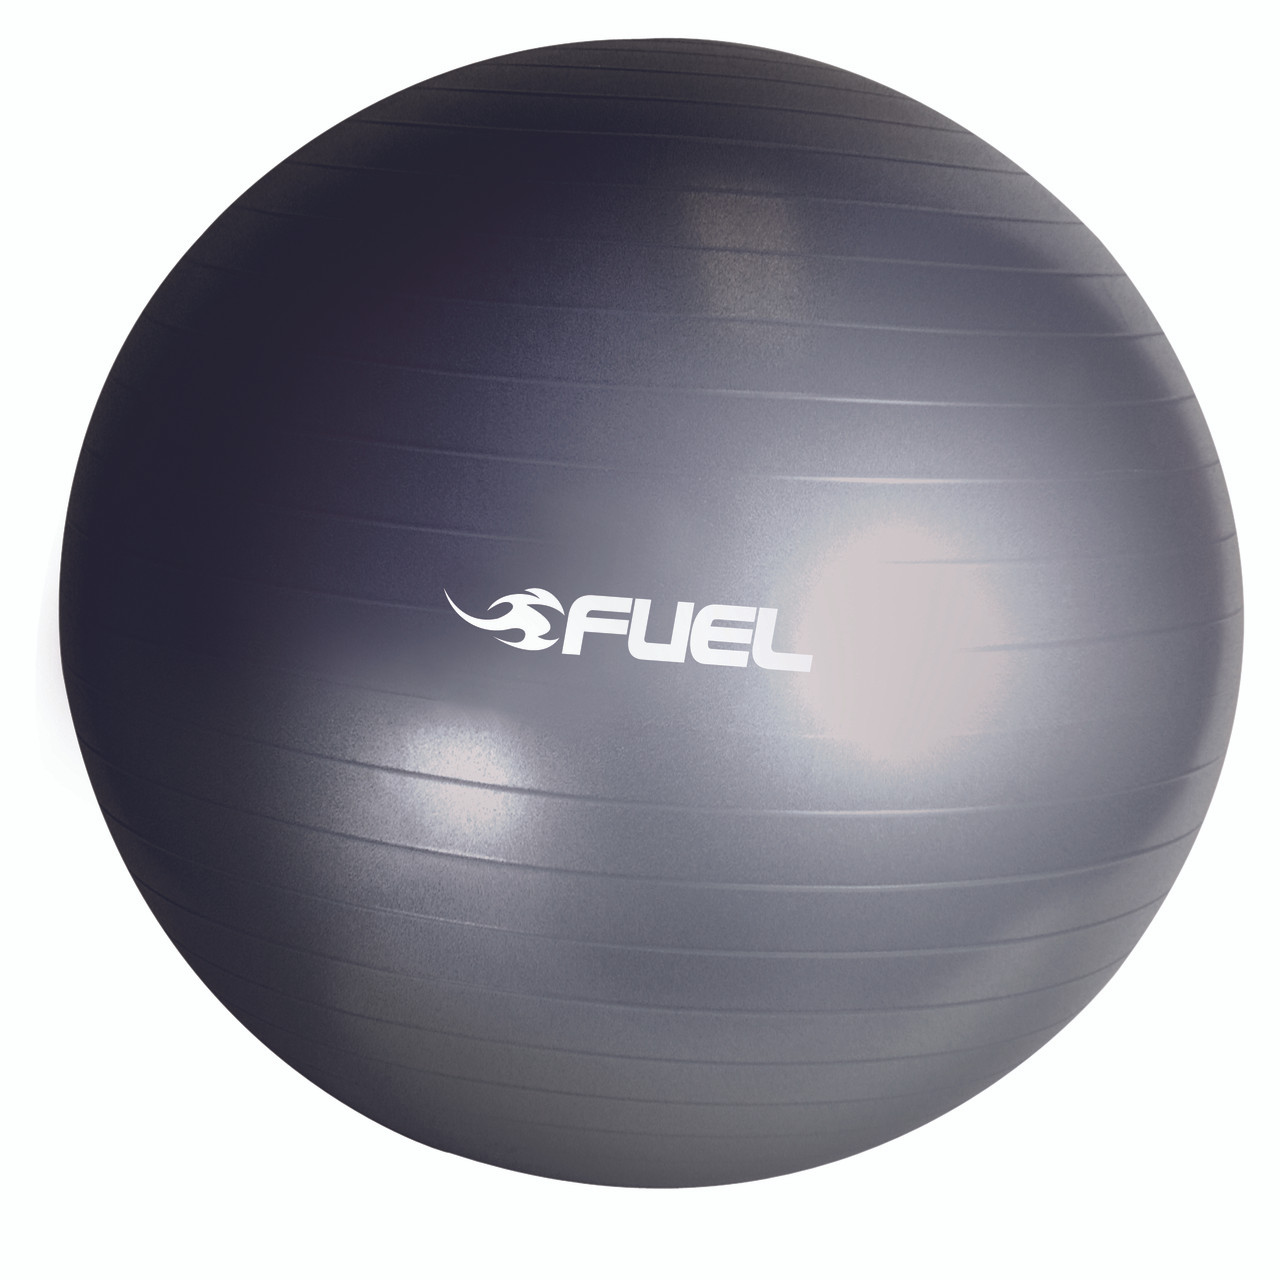 Fuel Pureformance Premium Anti-Burst Gym Ball, 65cm